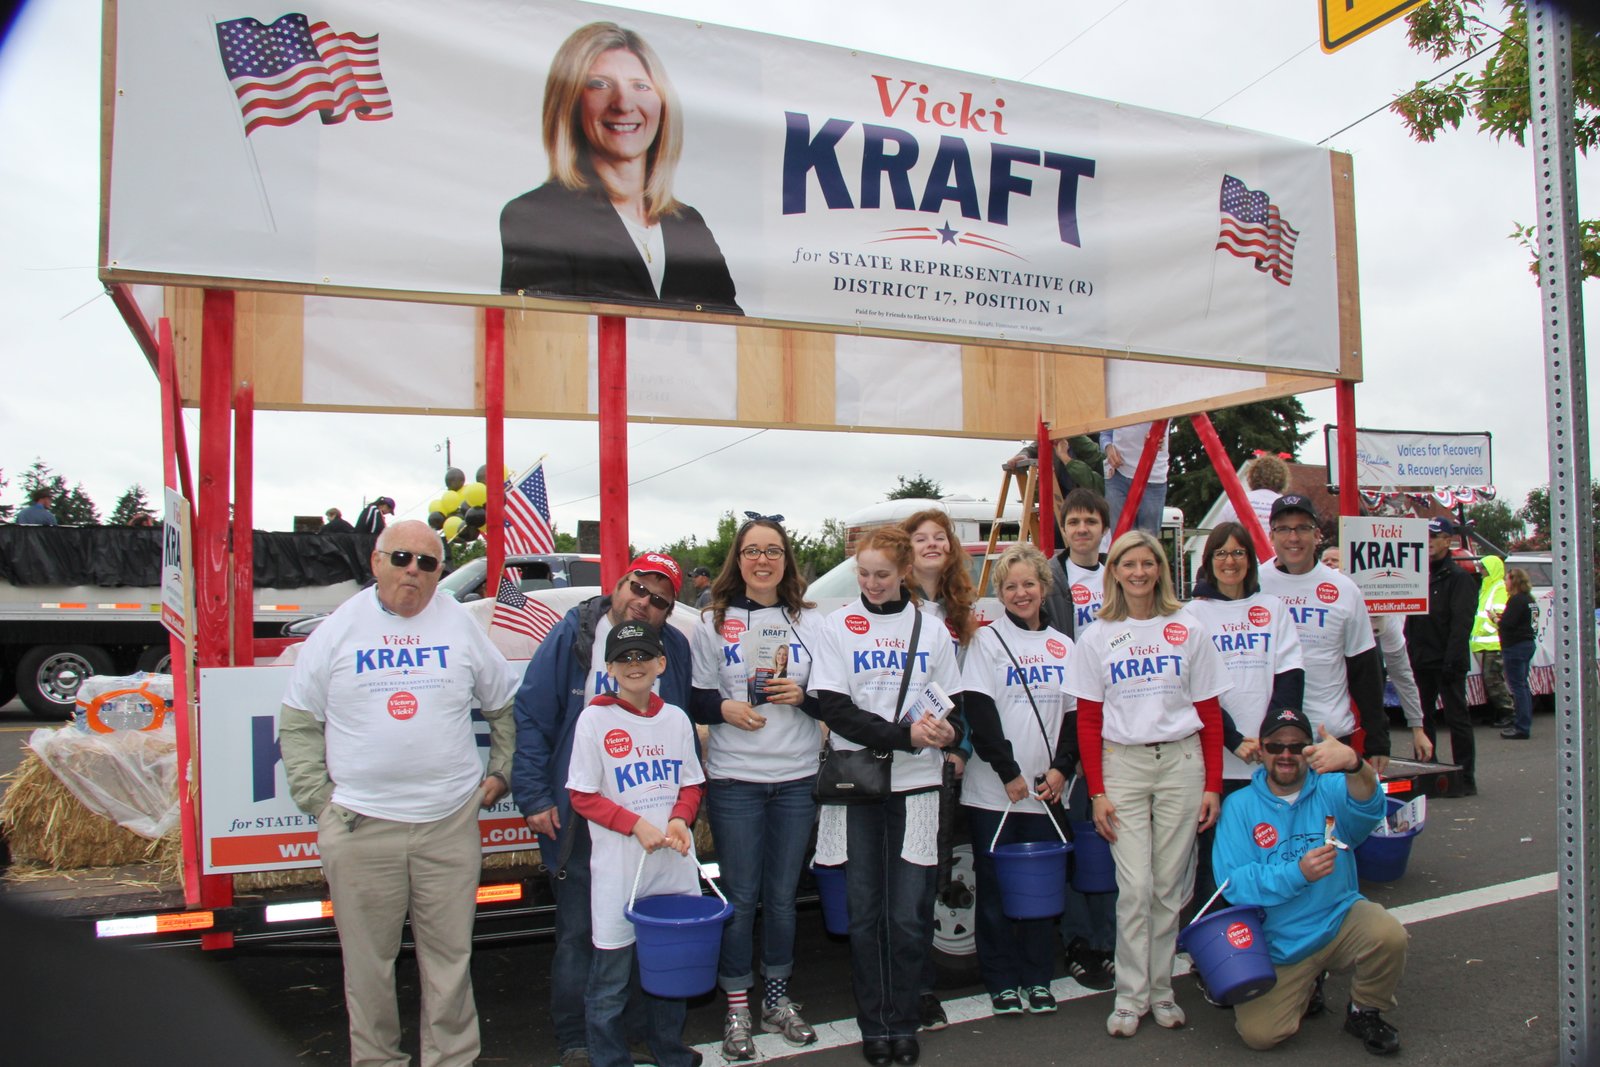 Vicki Kraft supporters